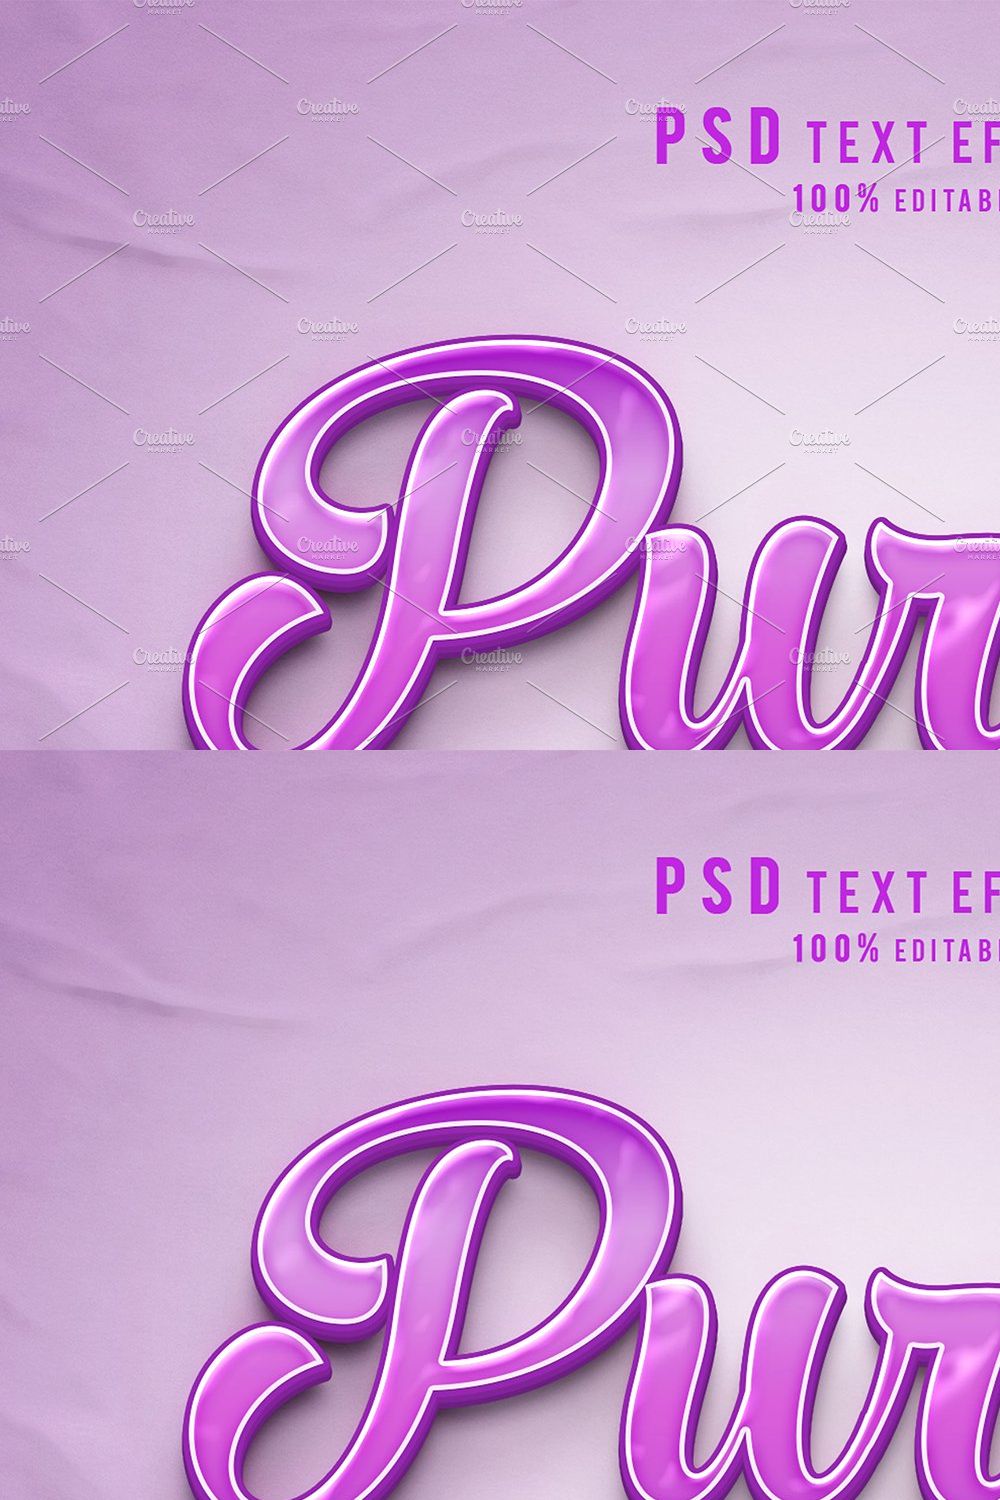 Creative Purple 3d text effects pinterest preview image.